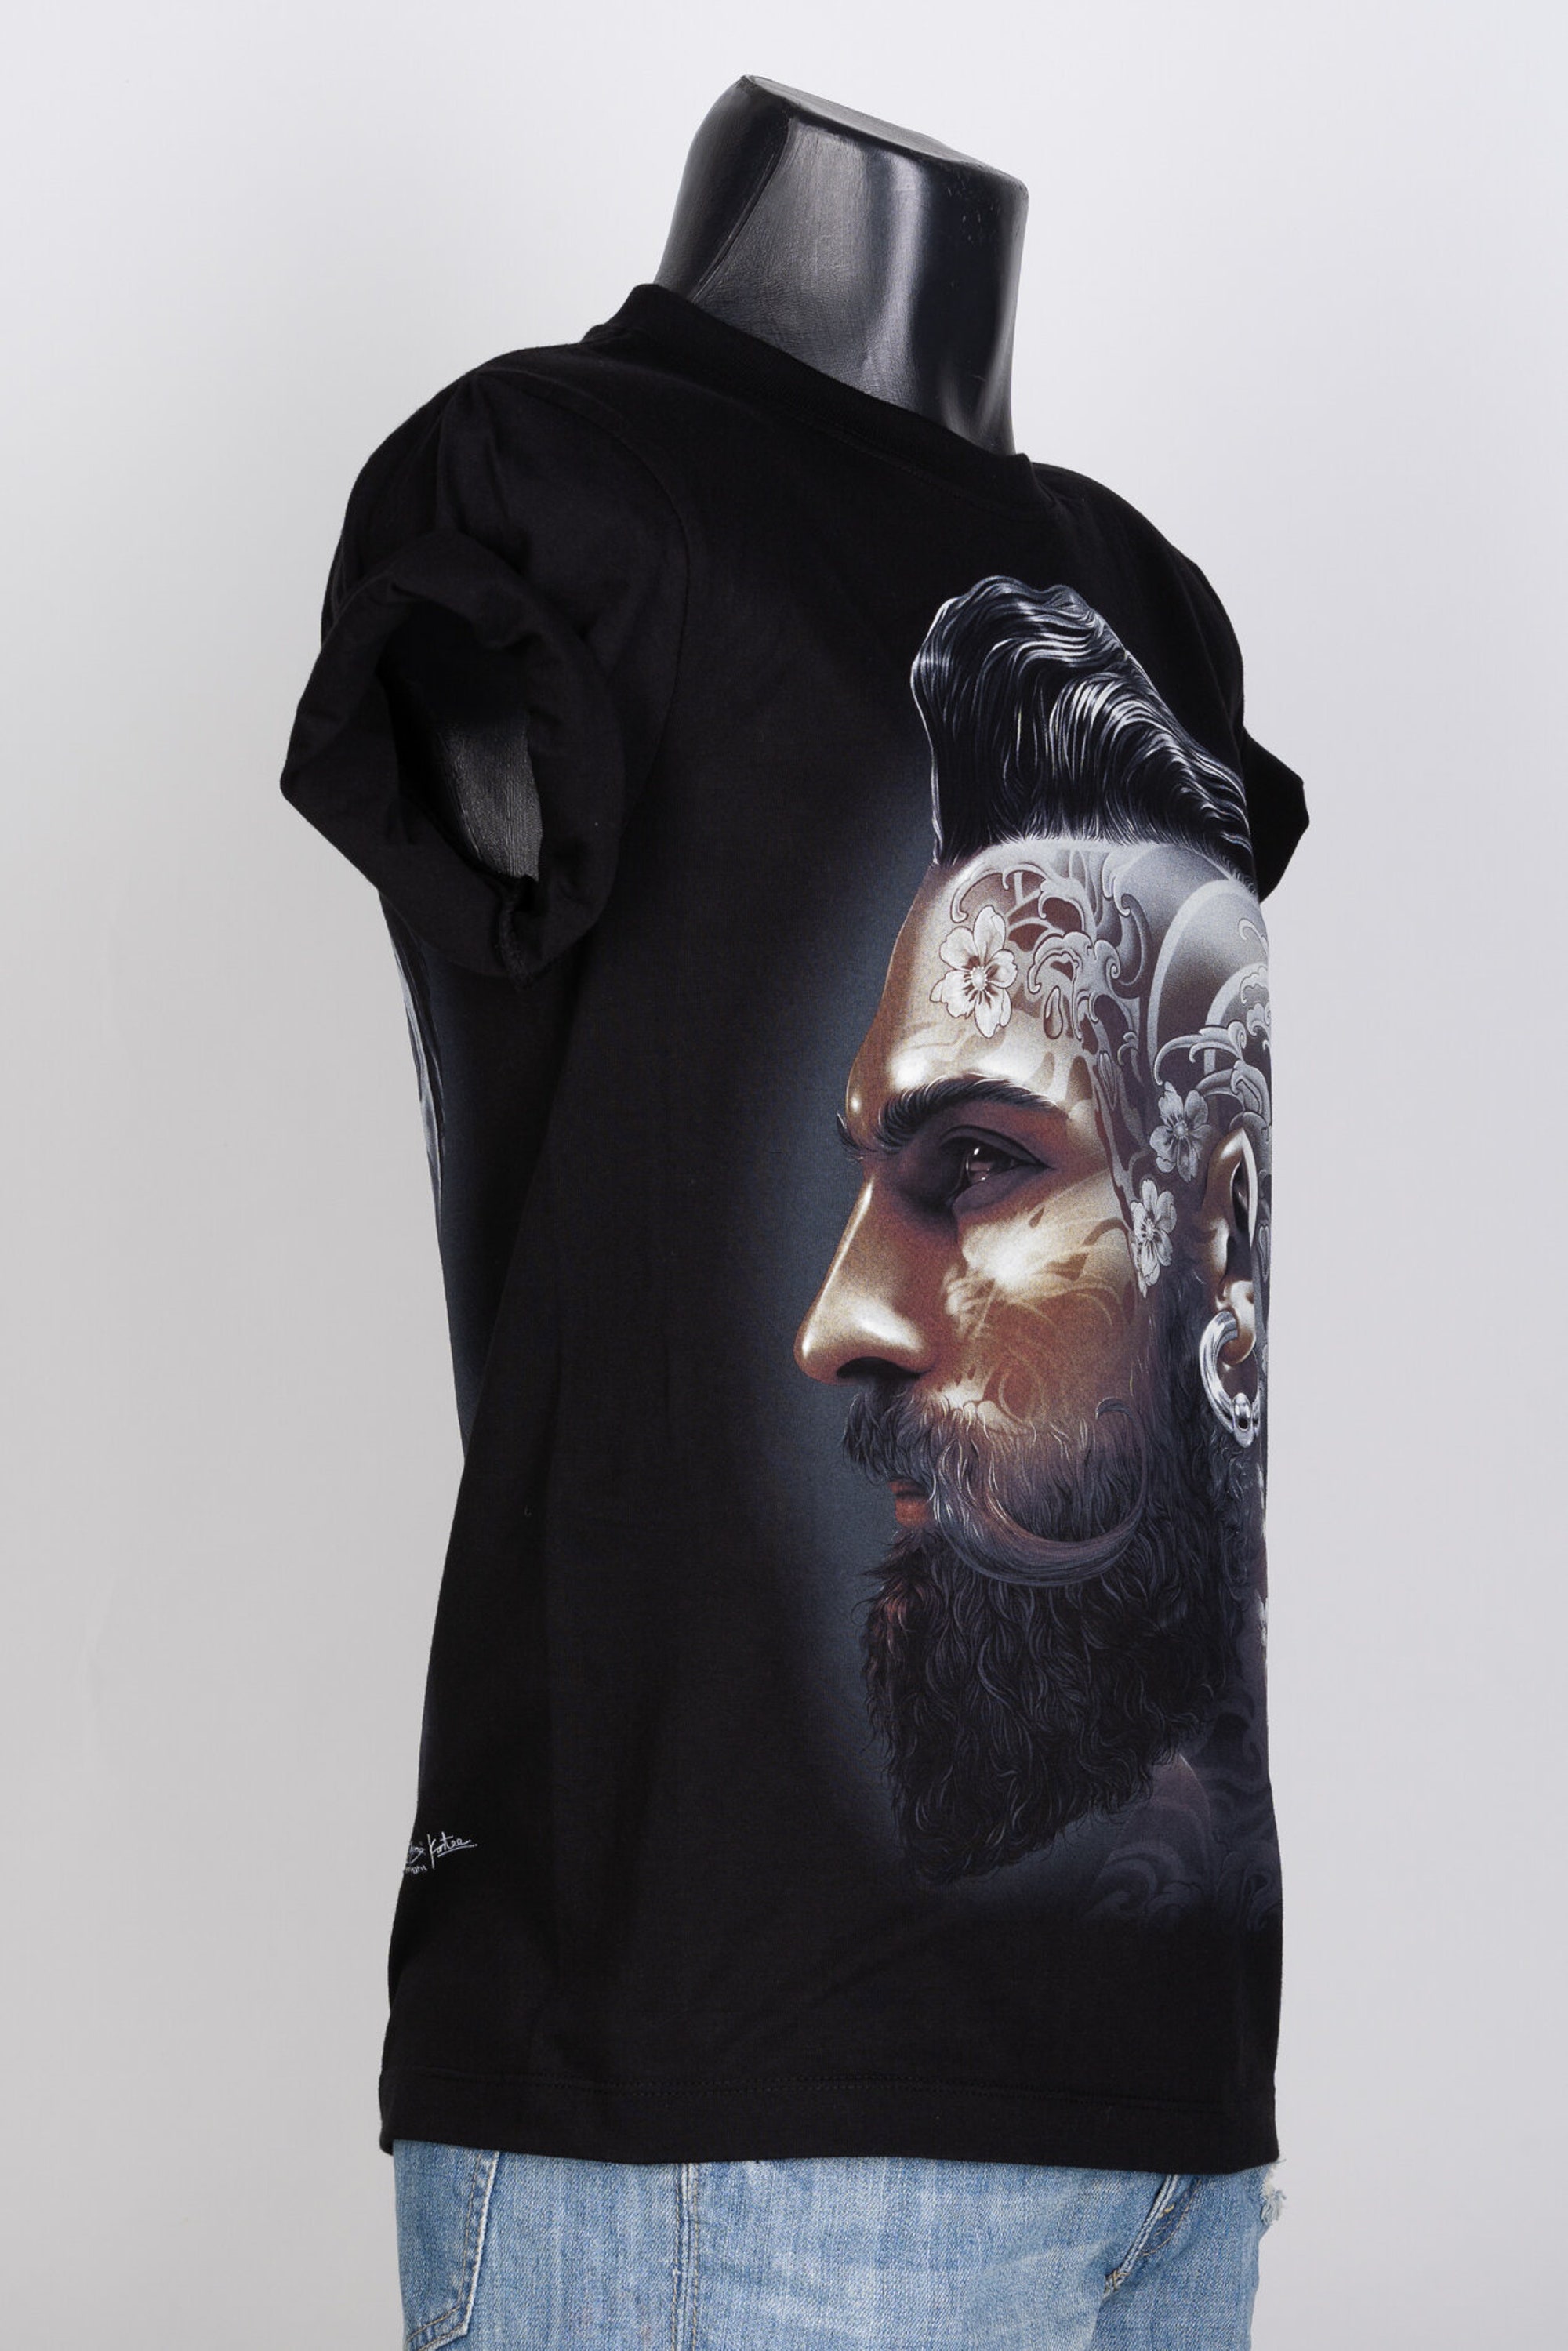 T-Shirt HD Rock Chang Original Beard Man Tattooed Head